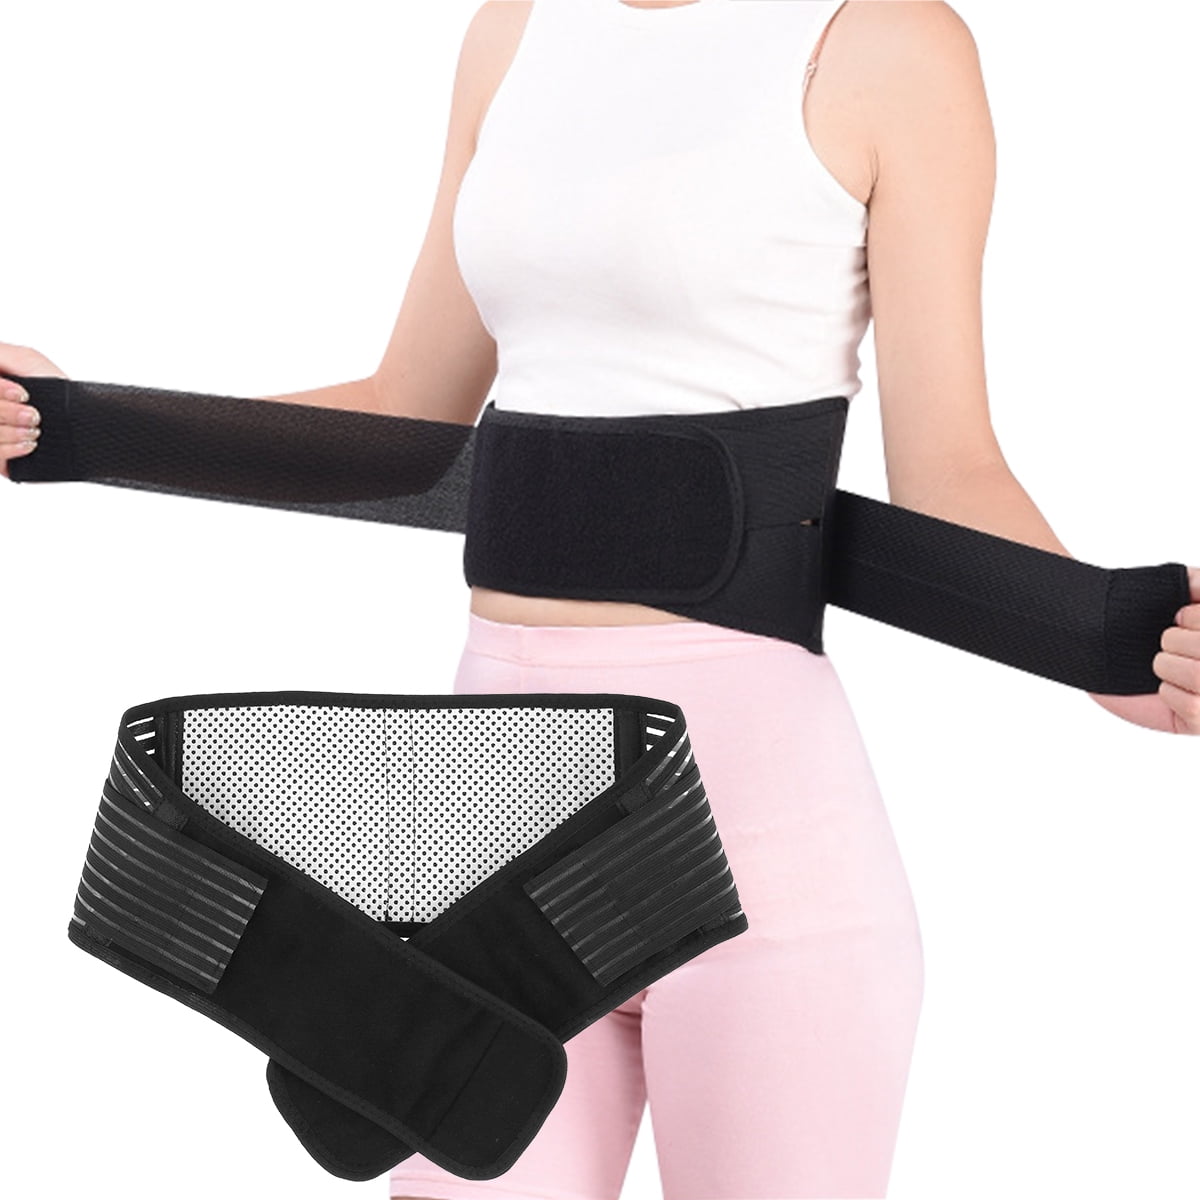 SchSin Back Support Belt Breathable Lower Back Brace Pain Relief